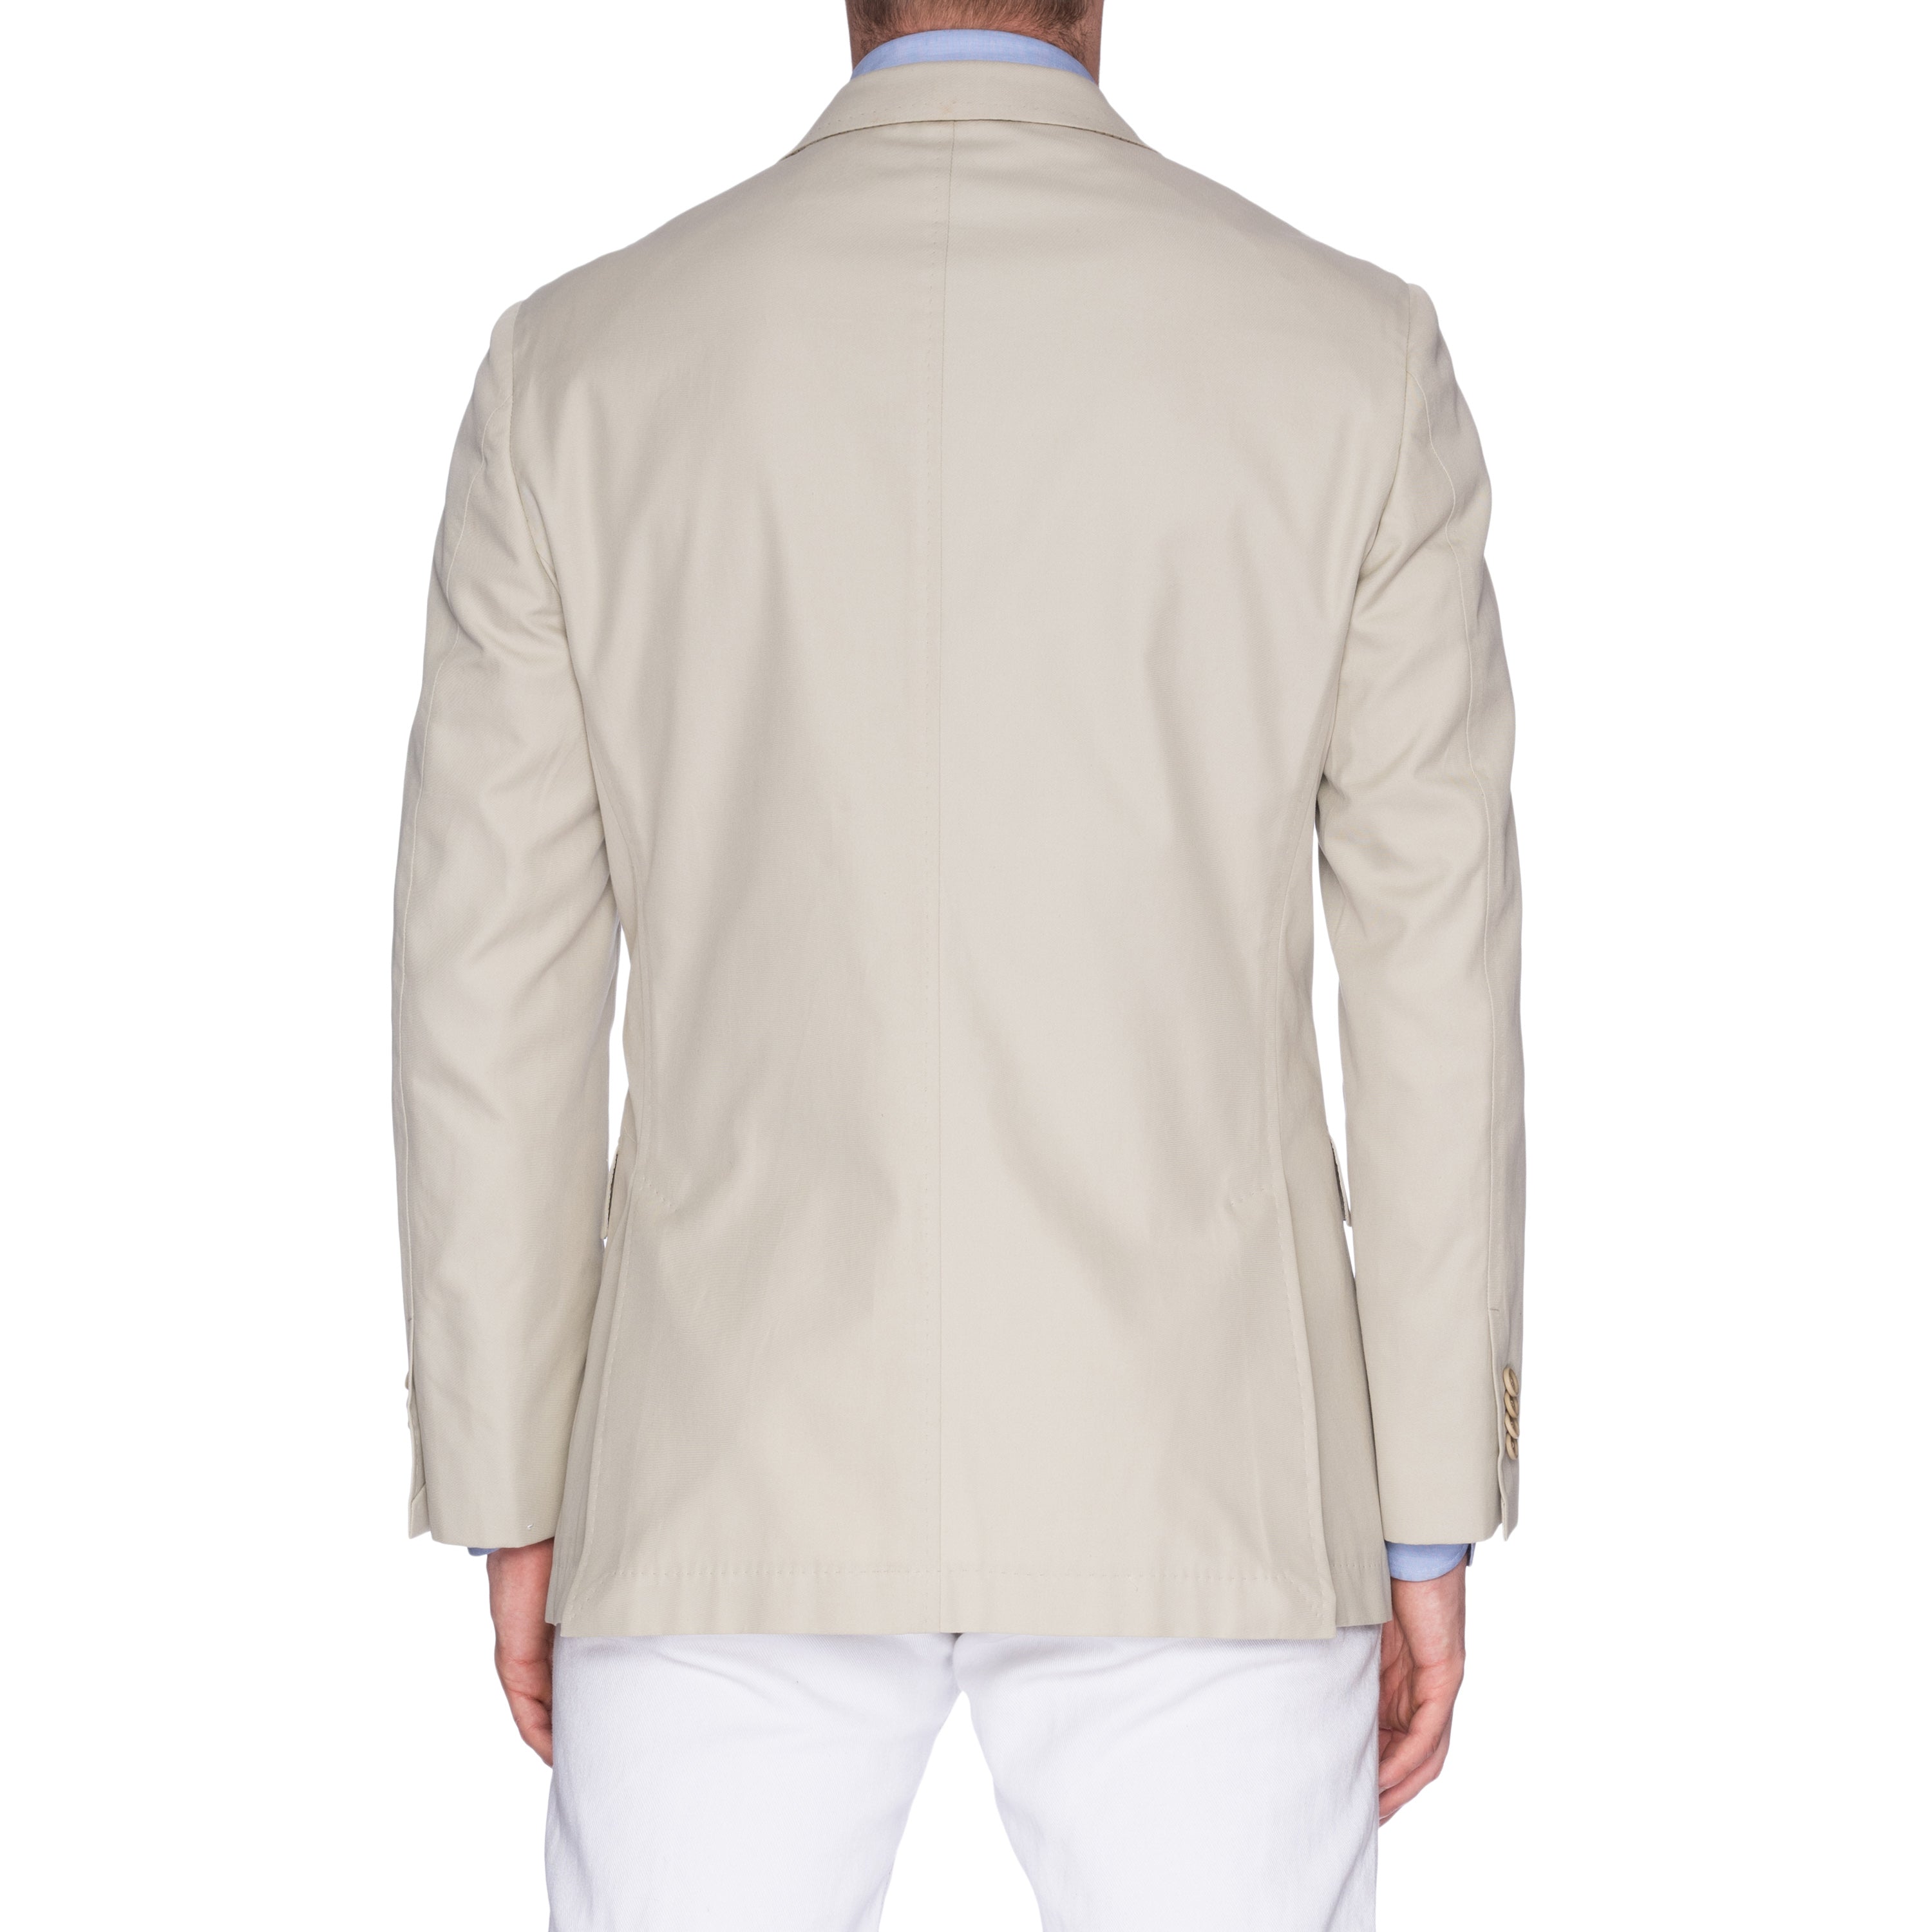 CASTANGIA LEISURE Beige Cotton Twill Unlined Jacket EU 50 NEW US 40 CASTANGIA